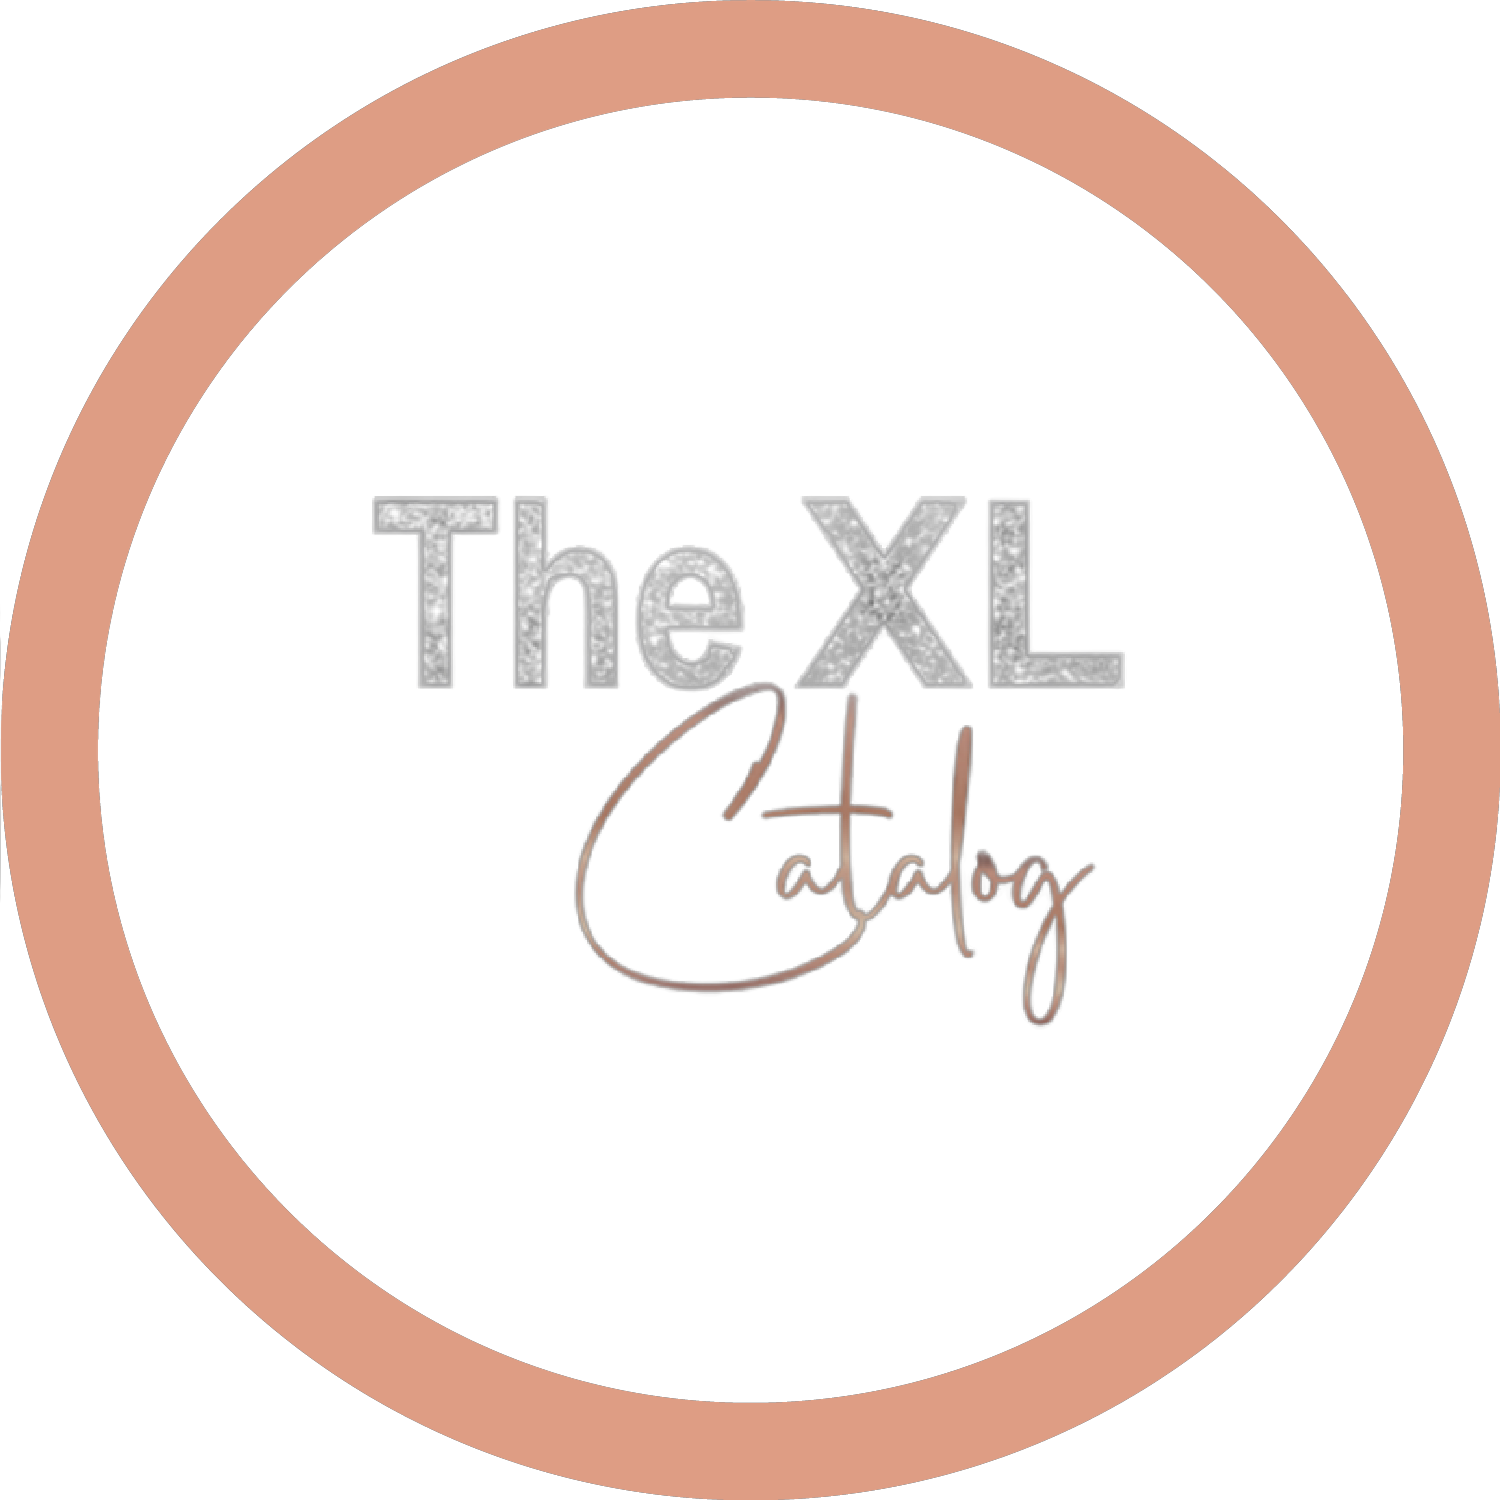 The XL Catalog